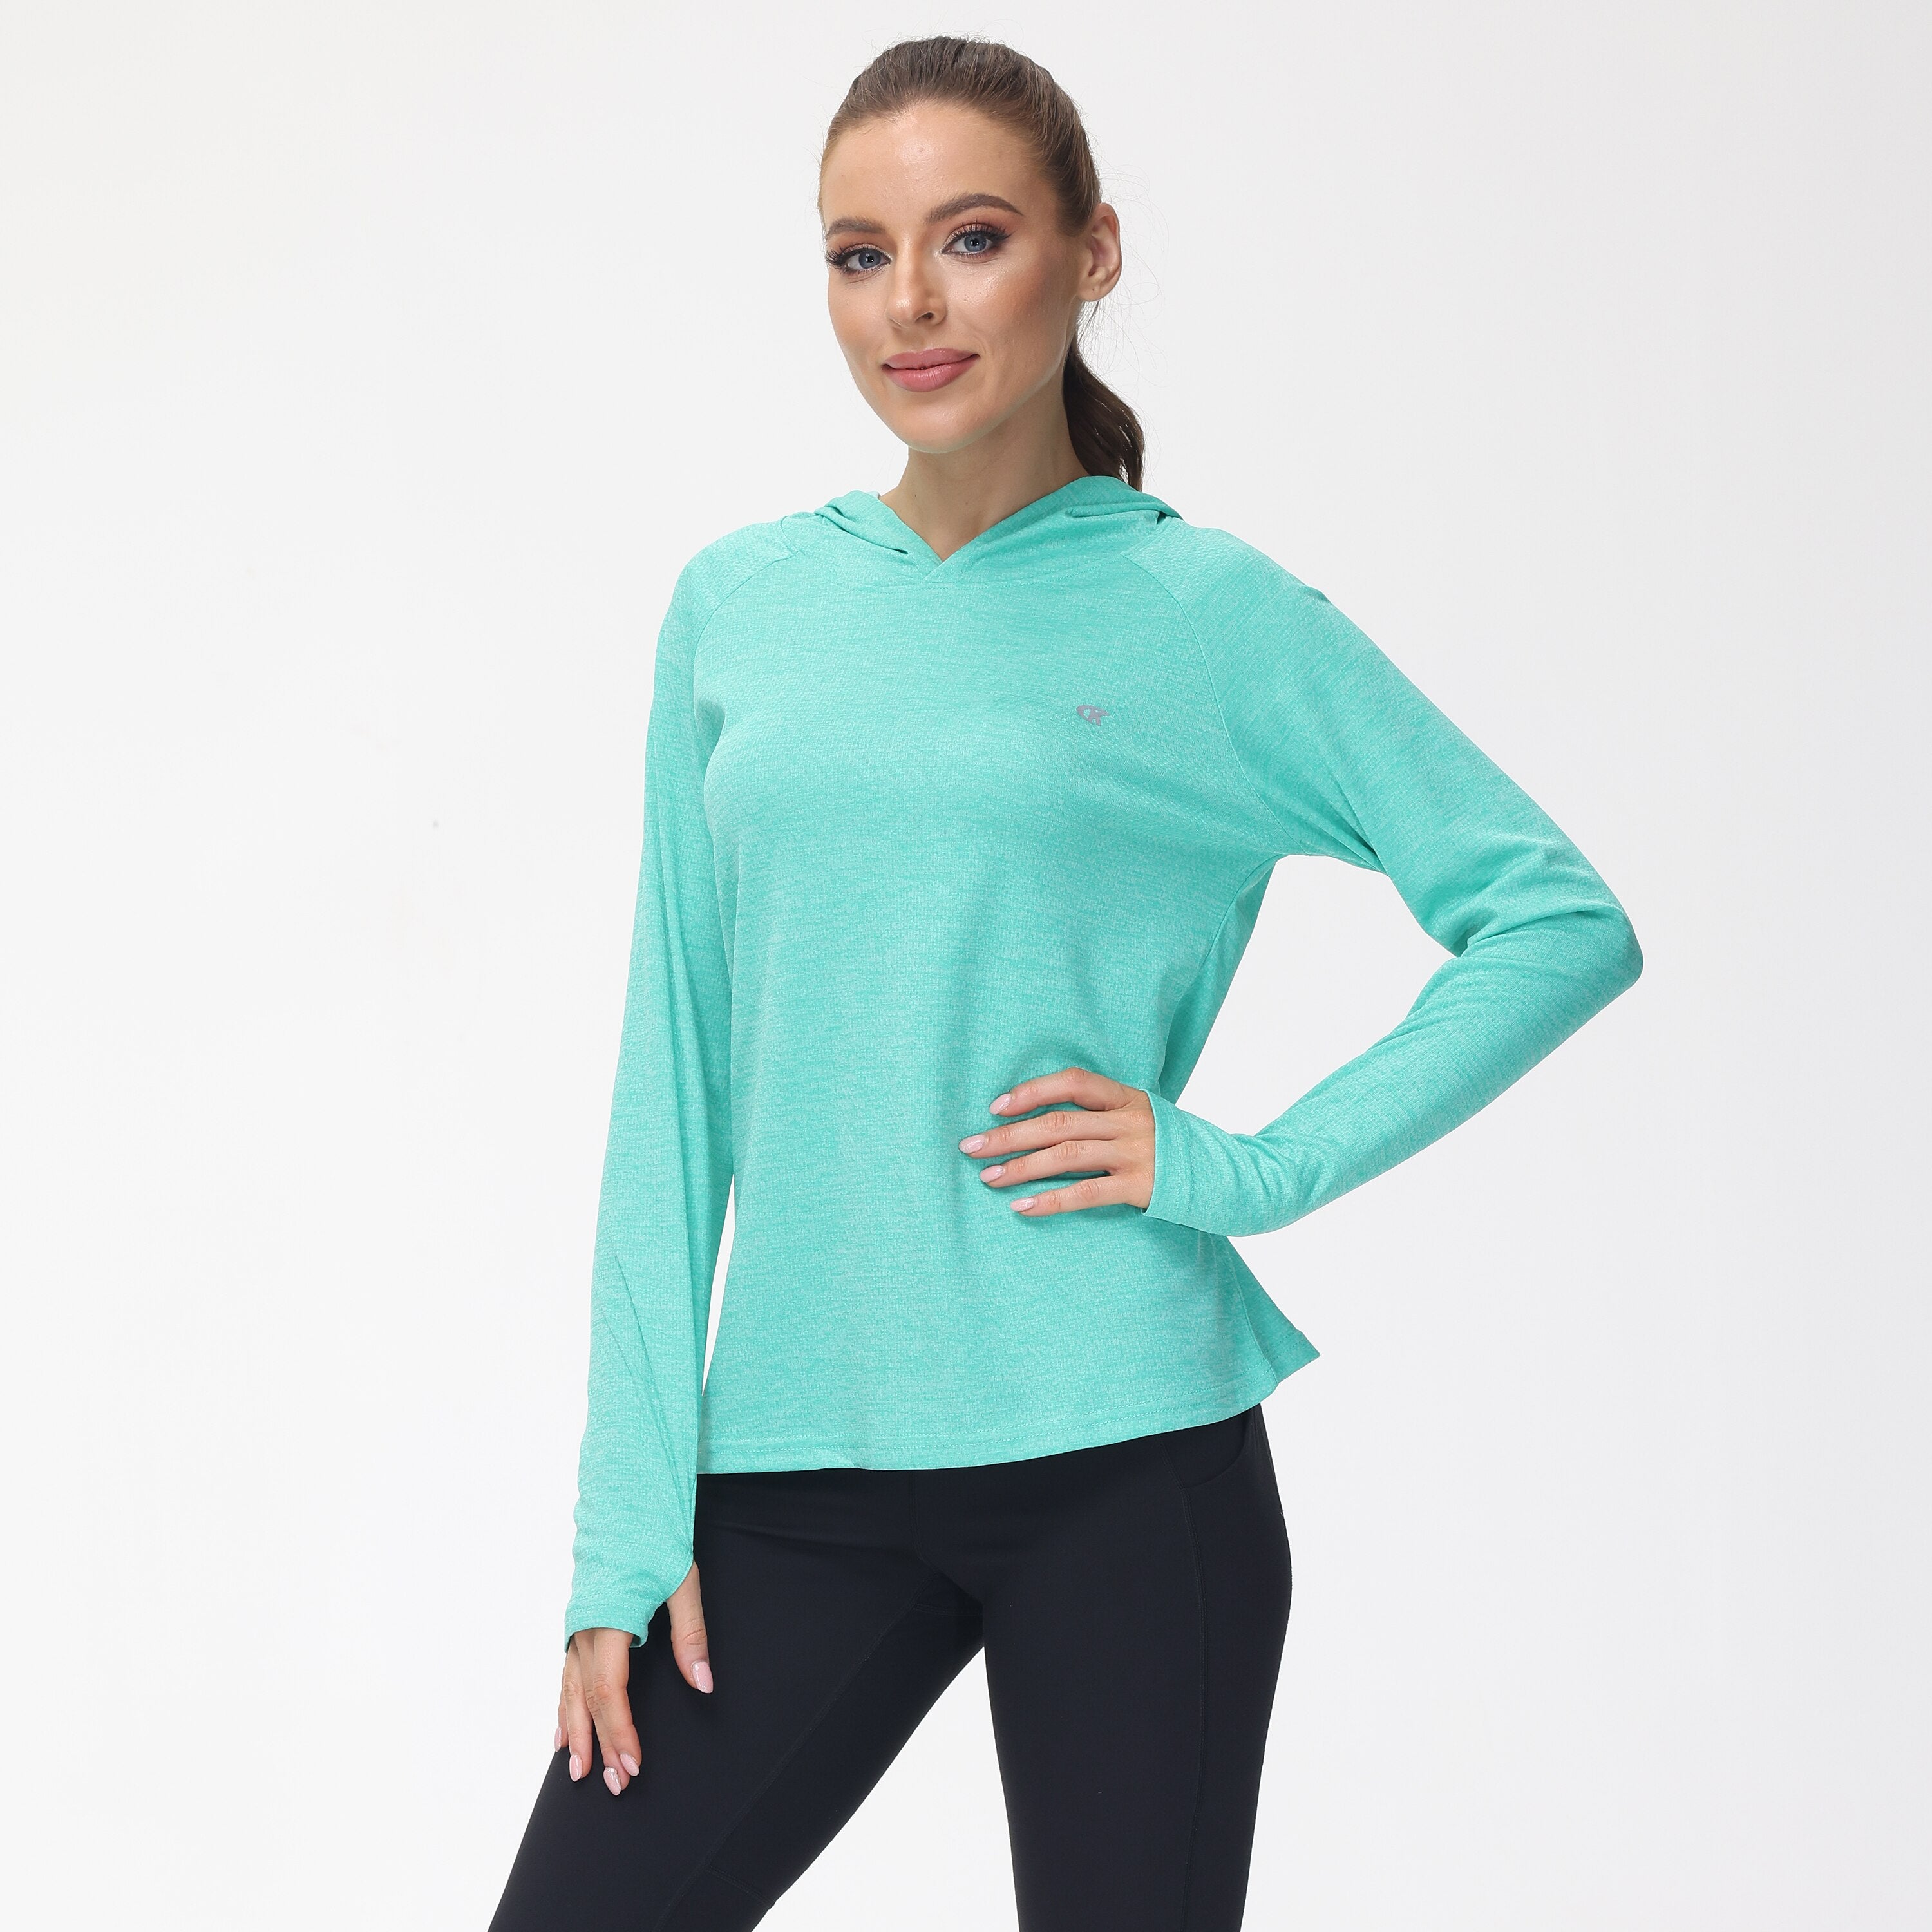 Buy lightgreen Hiking and Running Long Sleeve T-Shirt Rash Guard UPF 50+ Quick Dry Lightweight For women